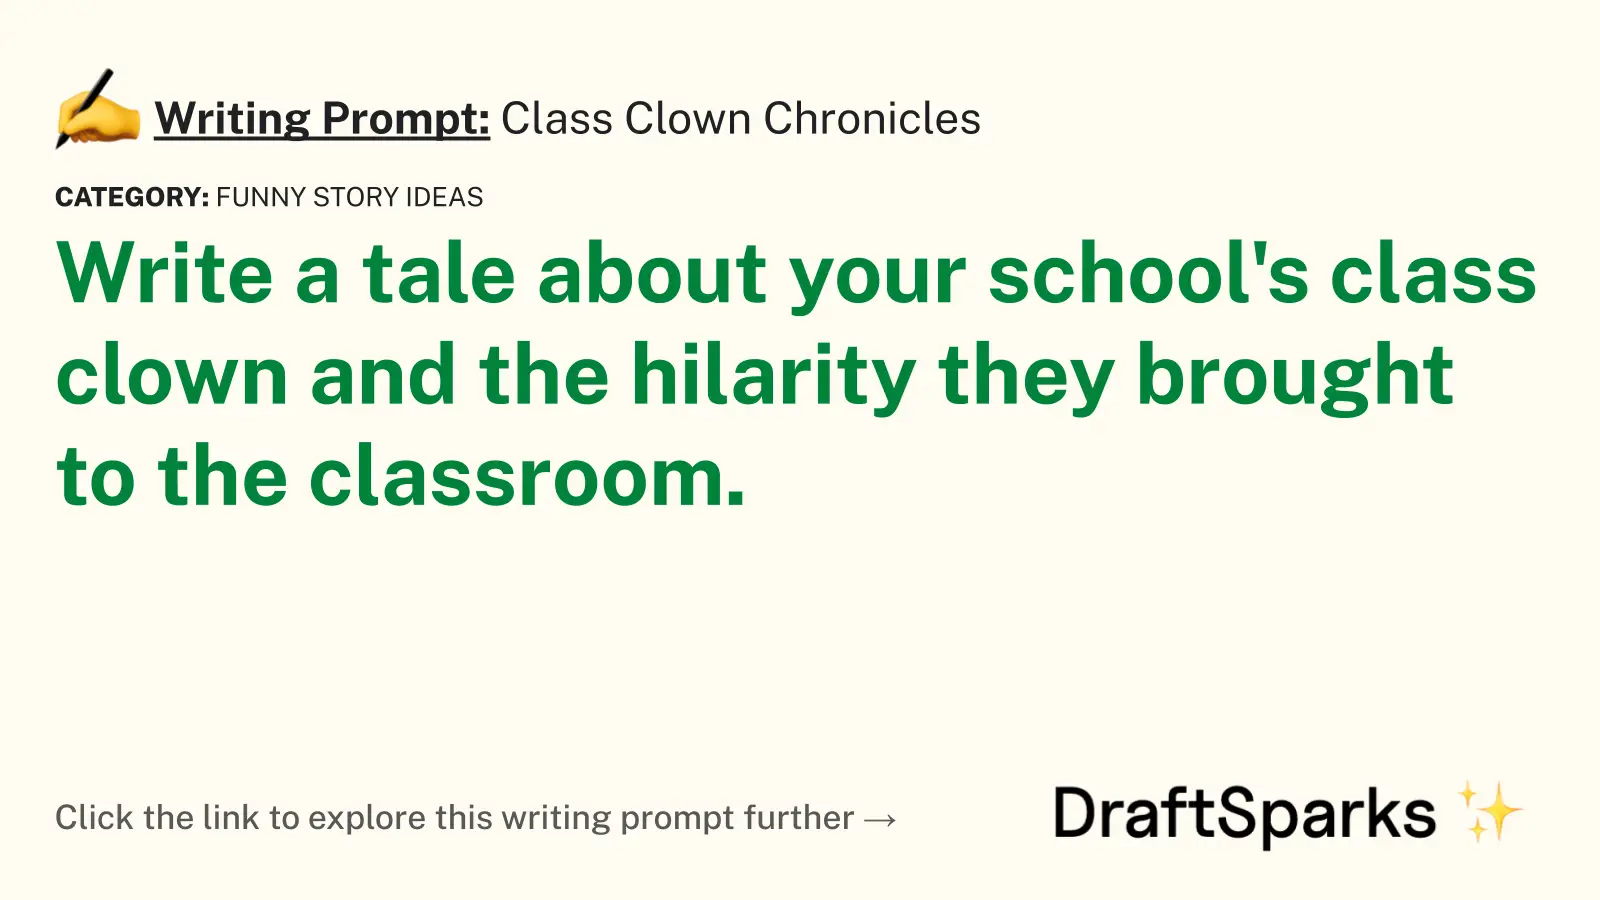 Class Clown Chronicles